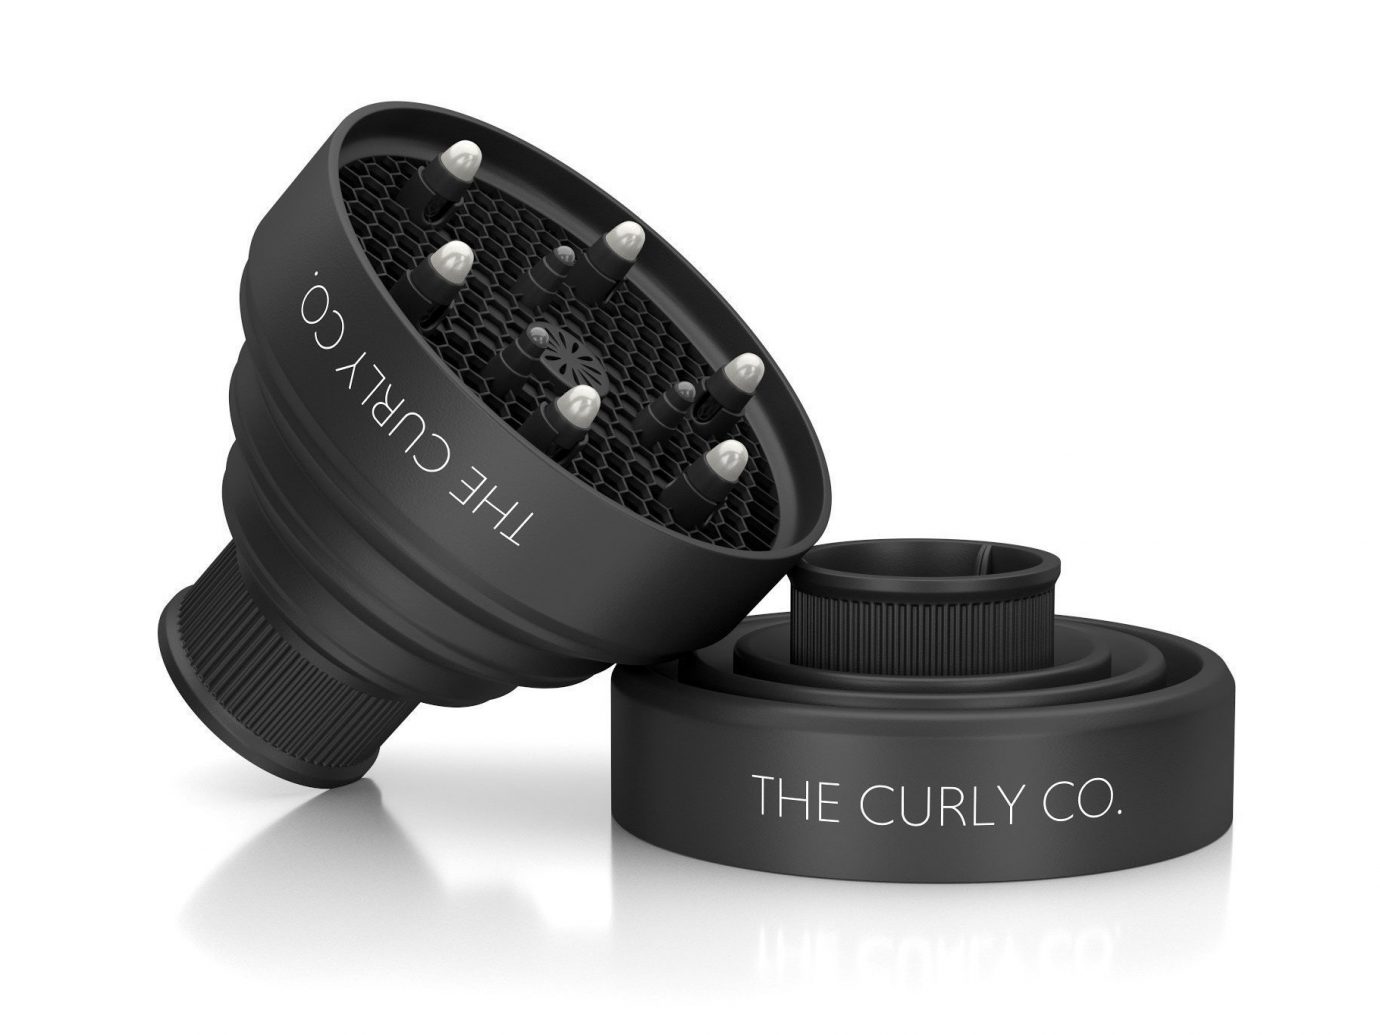 Travel Tips camera lens product hardware product design electronics lens teleconverter camera accessory angle